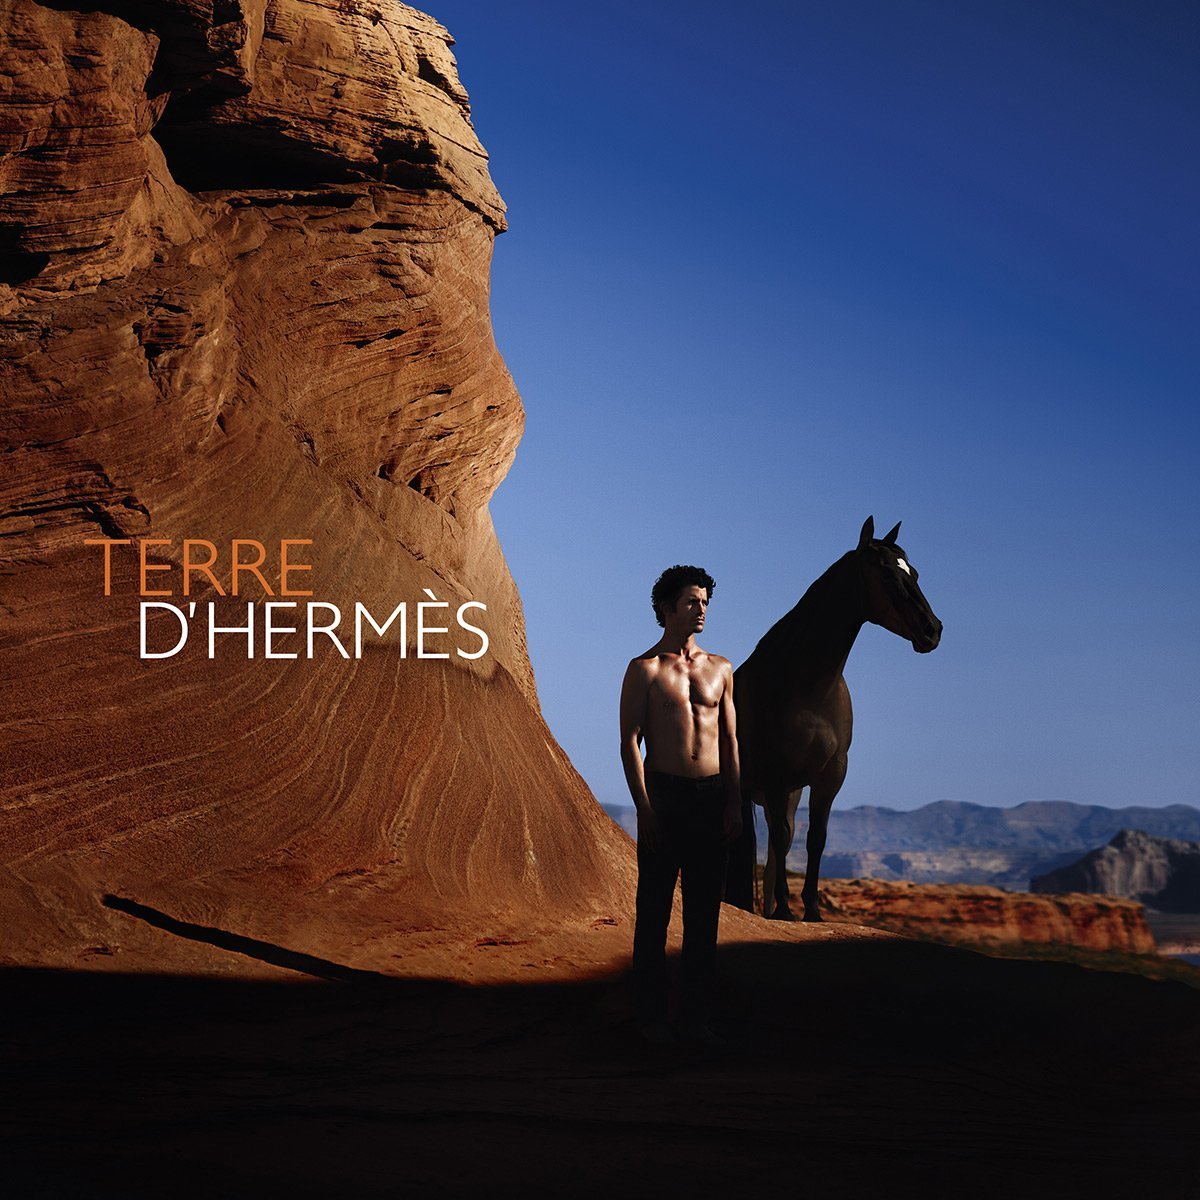 HERMÈS Terre d'Hermes Body Spray | My Perfume Shop Australia